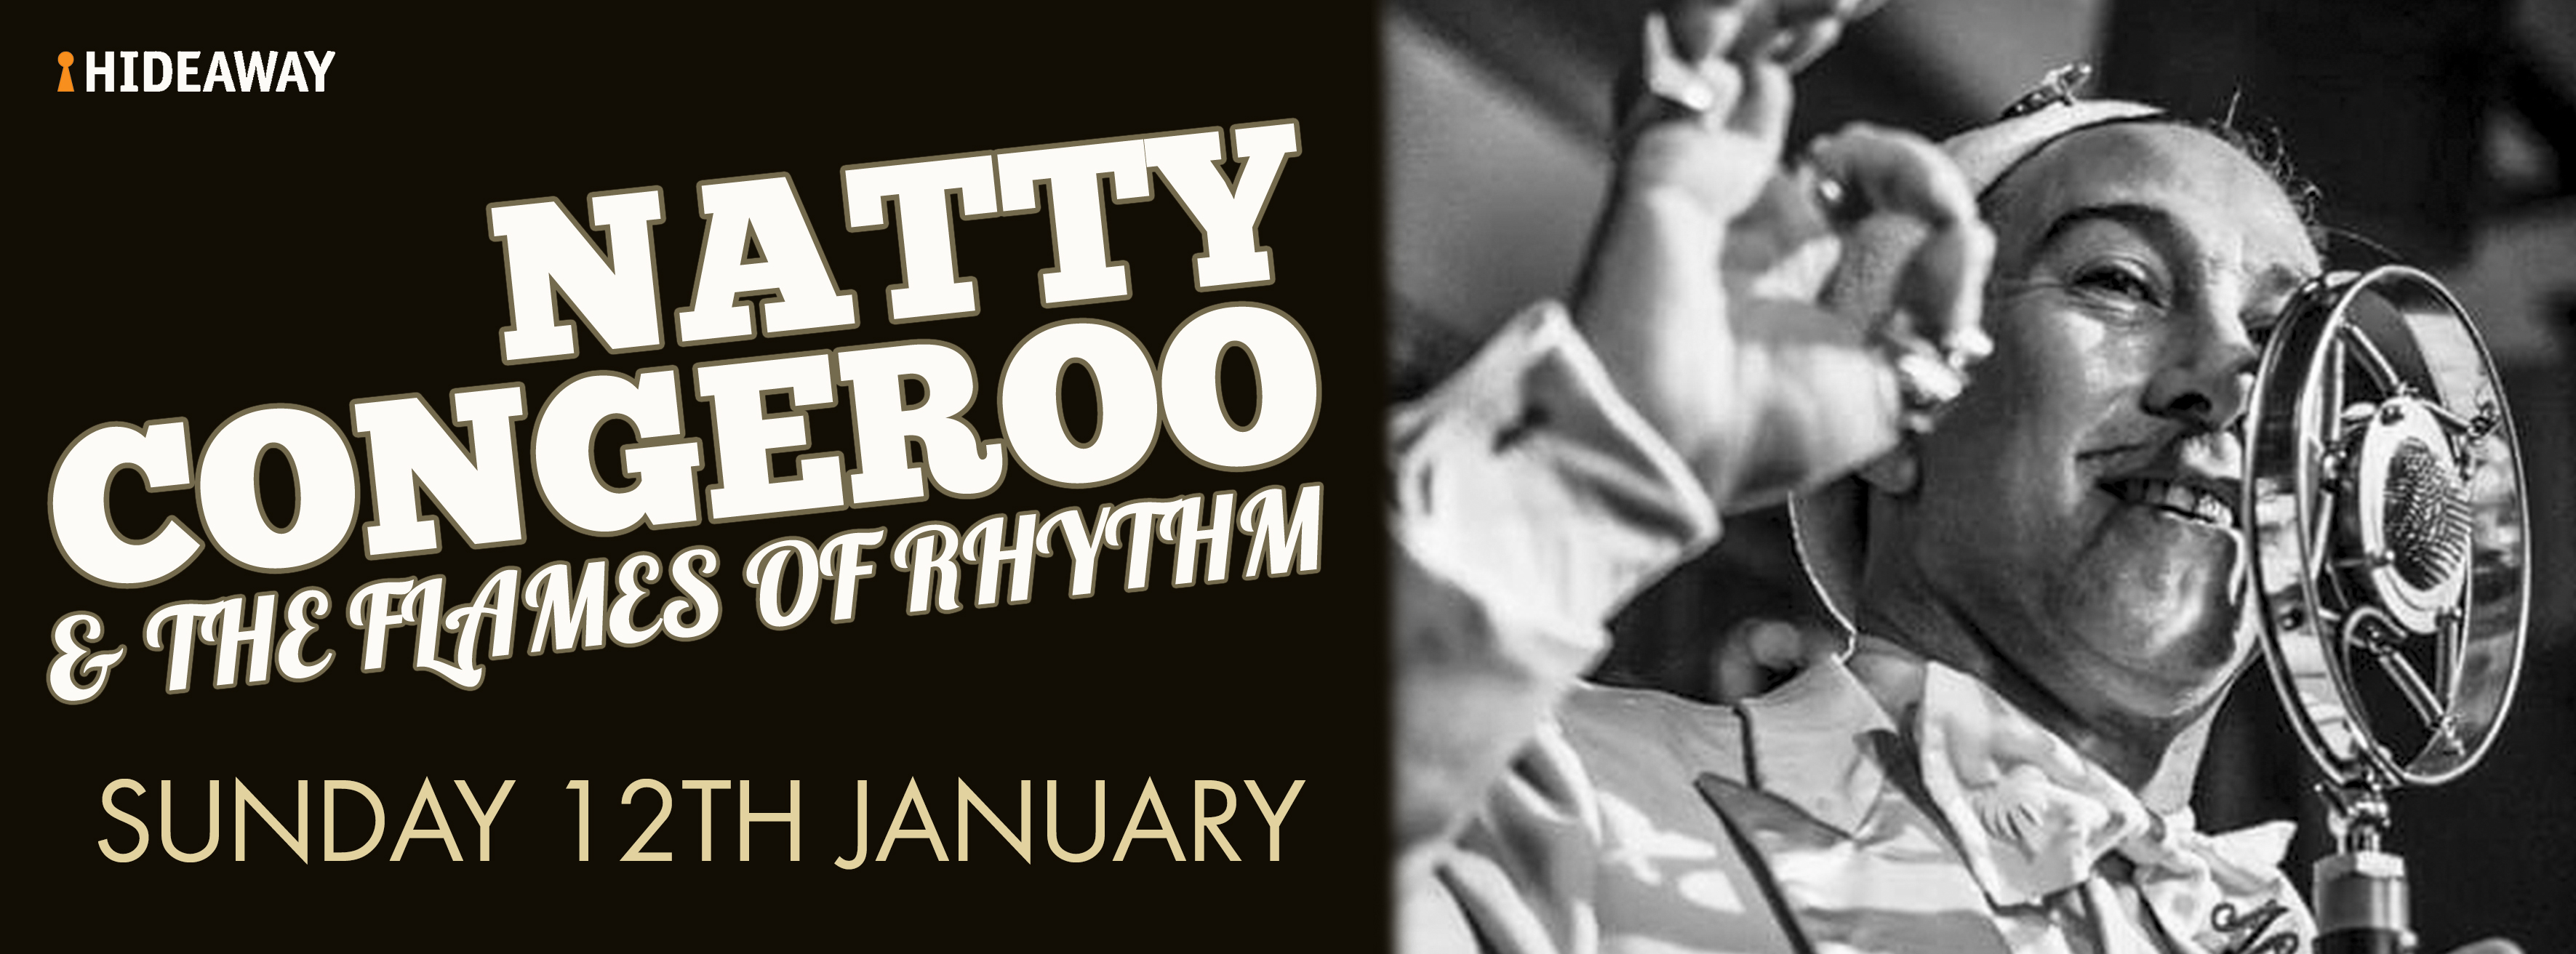 Natty Congeroo and The Flames of Rhythm Sunday 12th January at Hideaway Jazz Club London